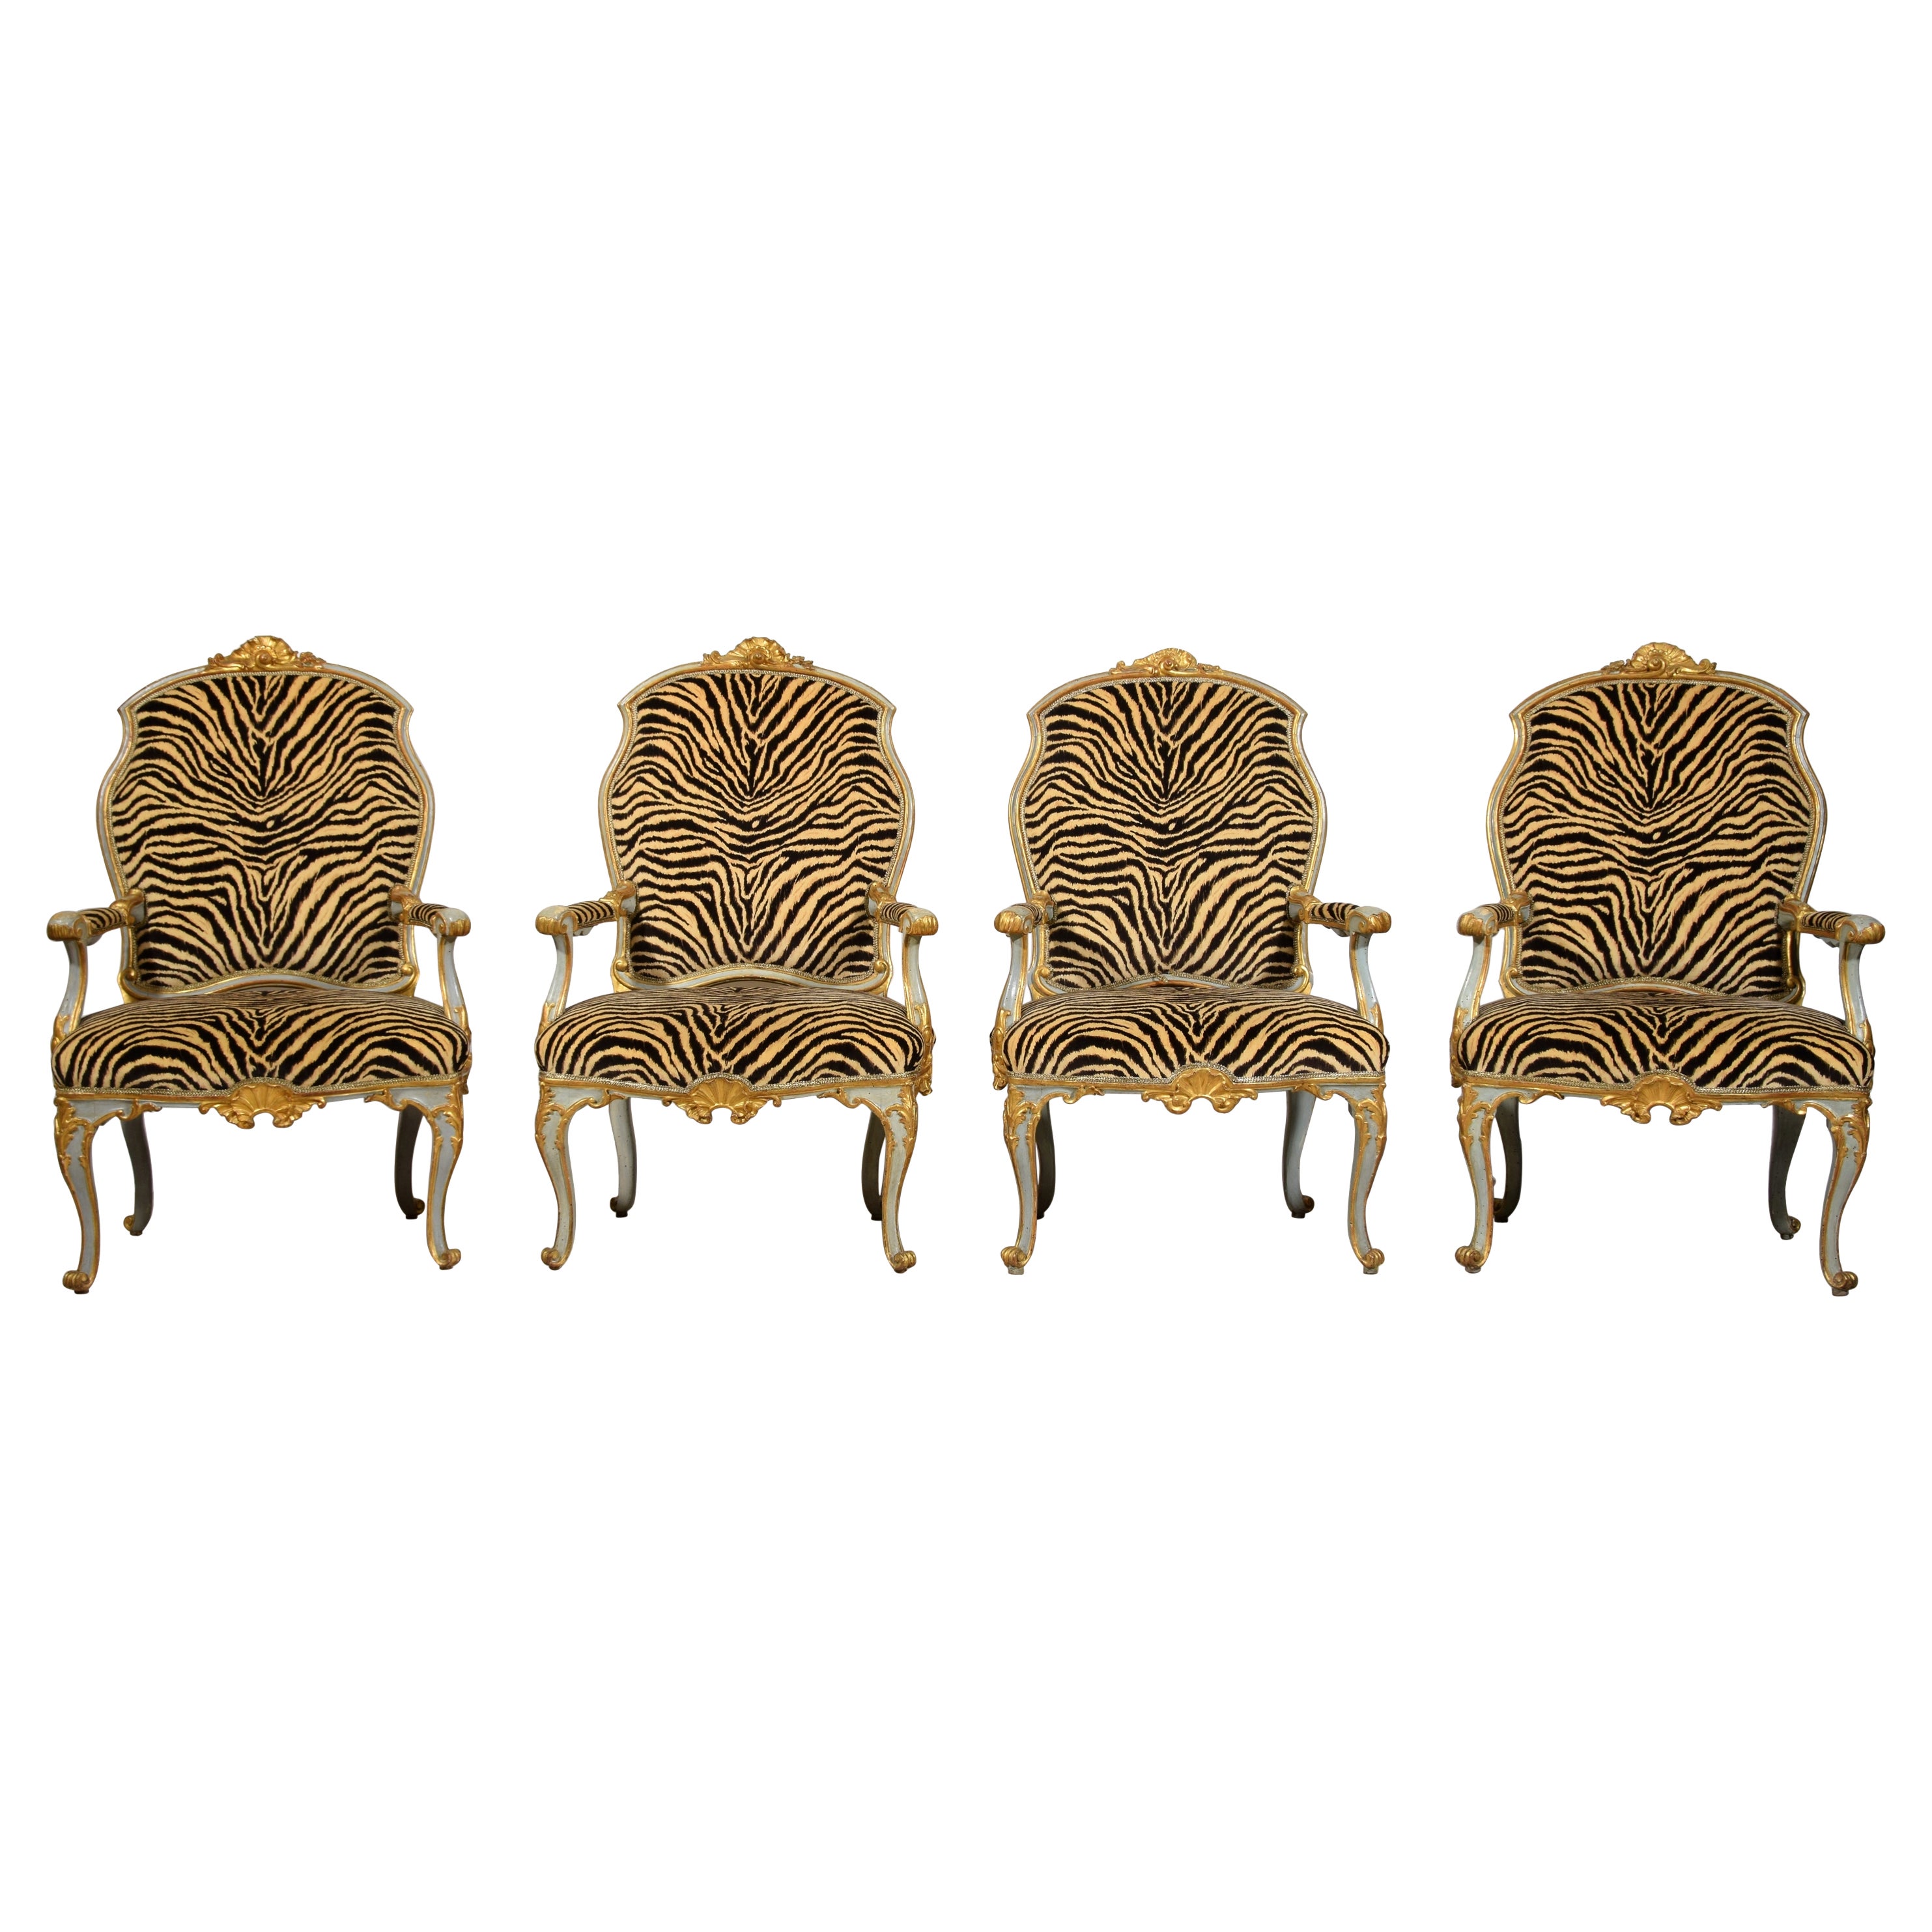 Vier große italienische Sessel aus lackiertem vergoldetem Holz aus dem 18. Jahrhundert